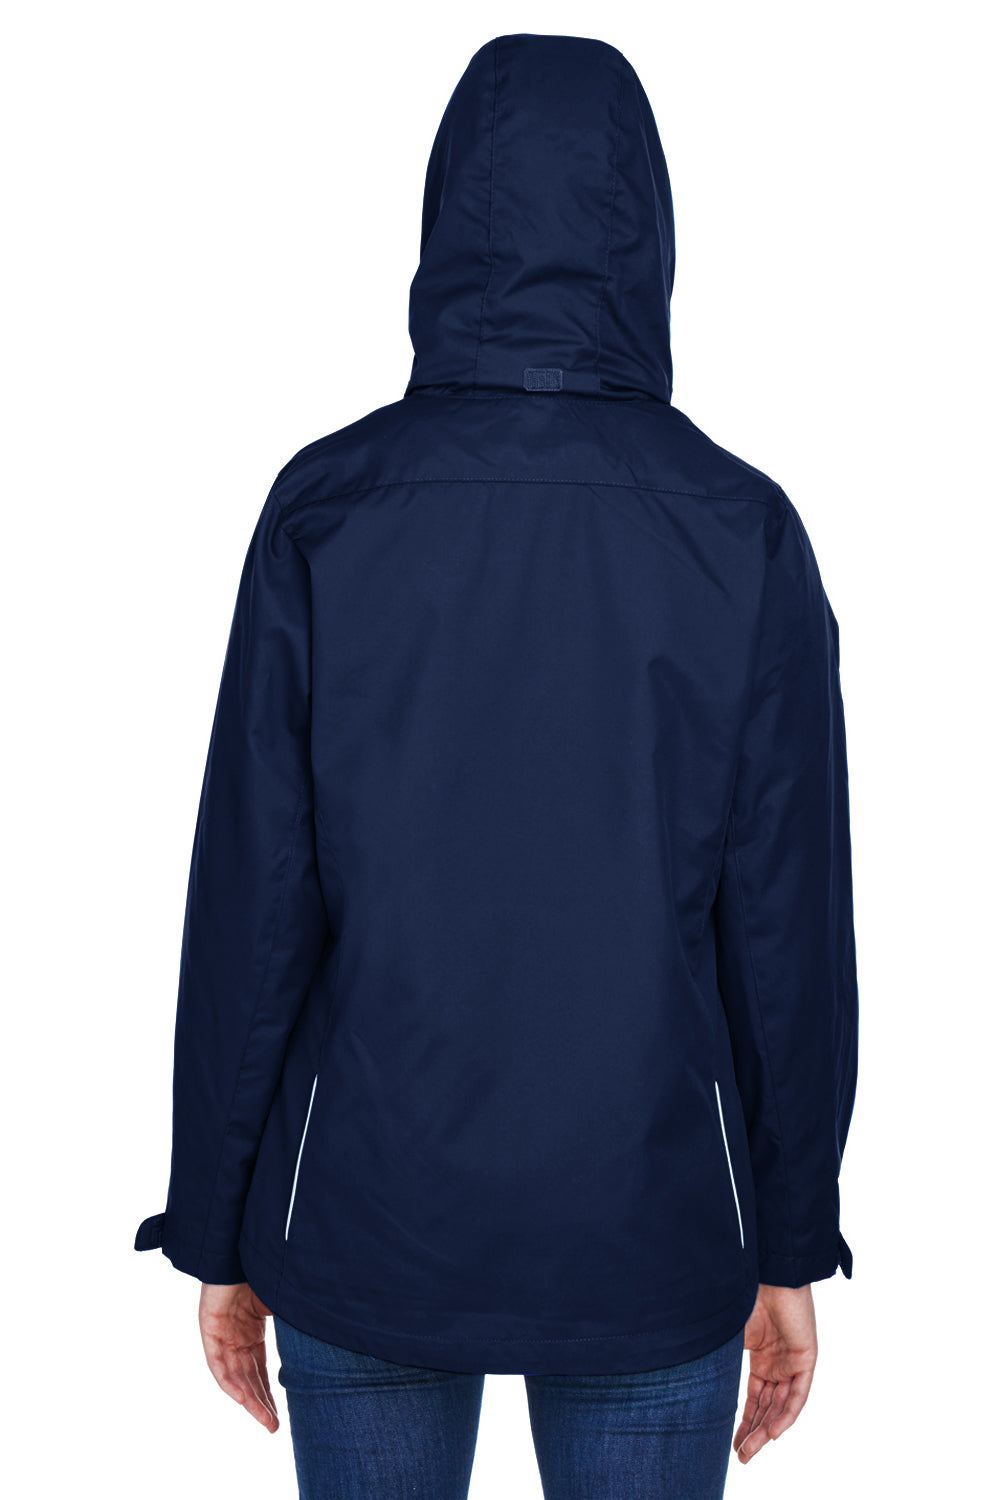 Core 365 78205 Womens Region 3-in-1 Water Resistant Full Zip Hooded Jacket Navy Blue Back